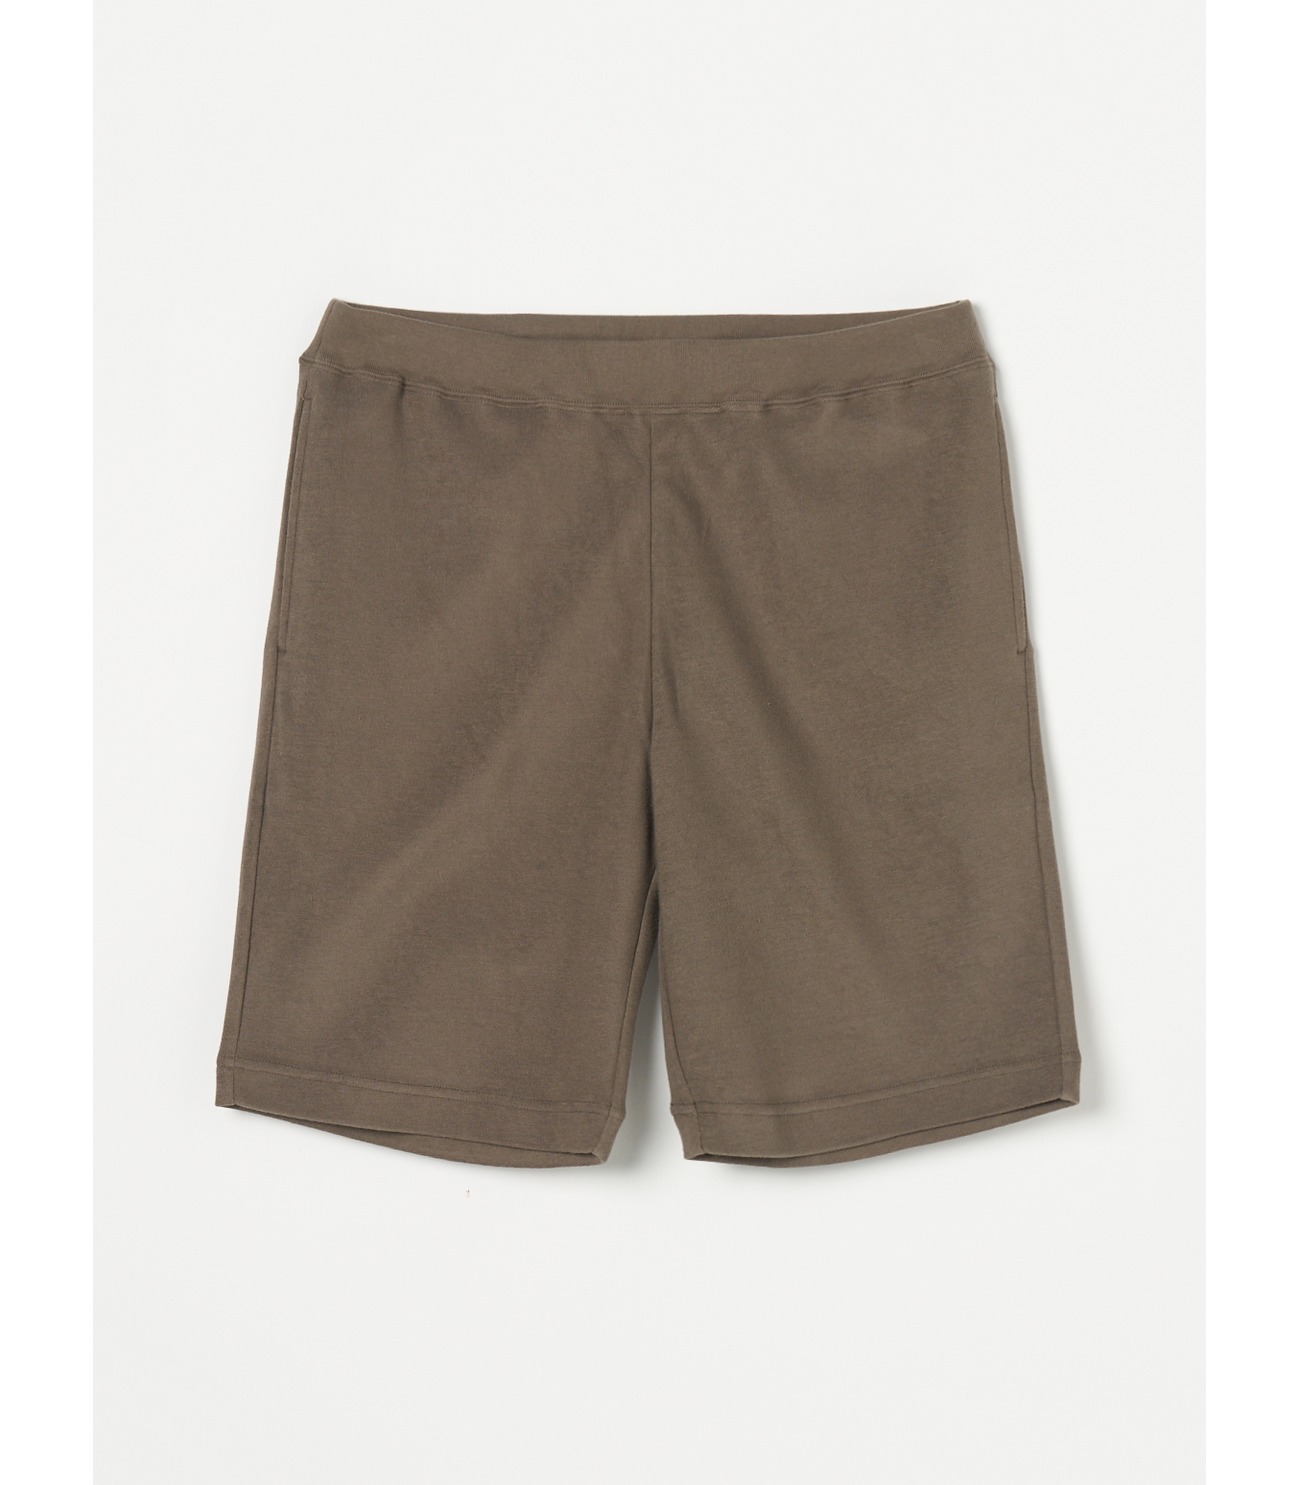 Men's compact pile shorts 詳細画像 moss khaki 1